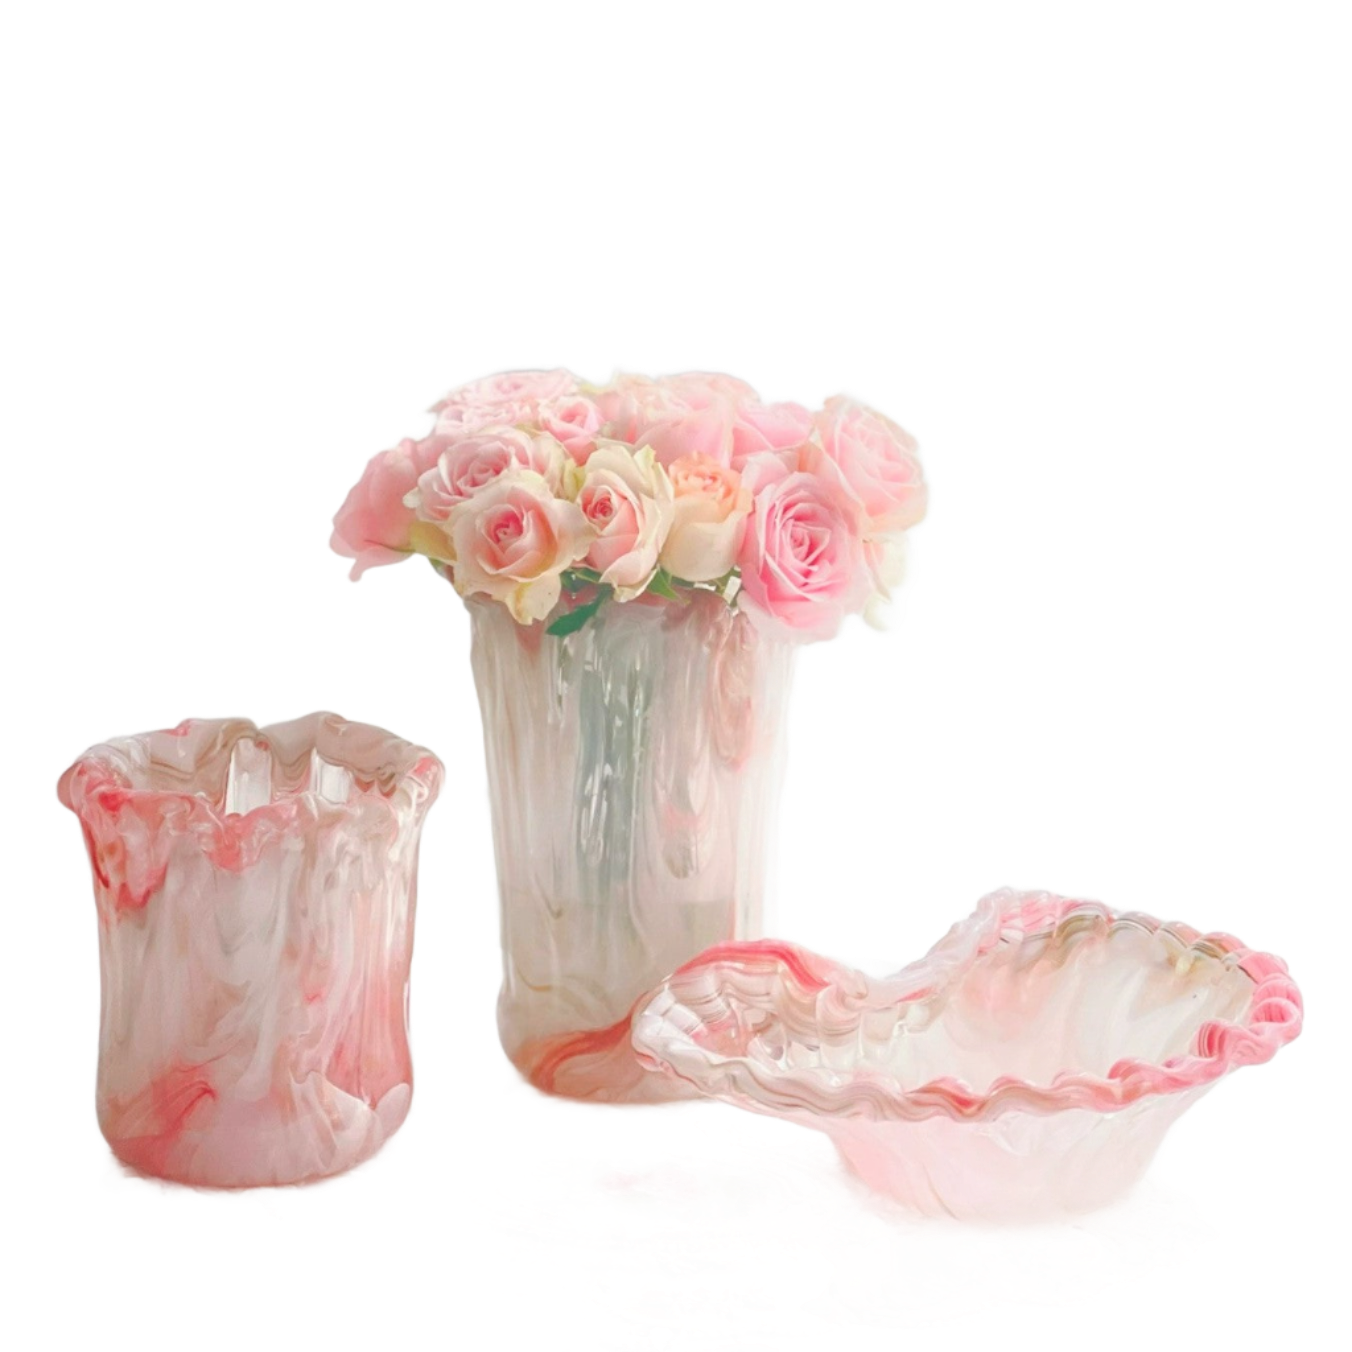 Handmade Pink Glass Vase